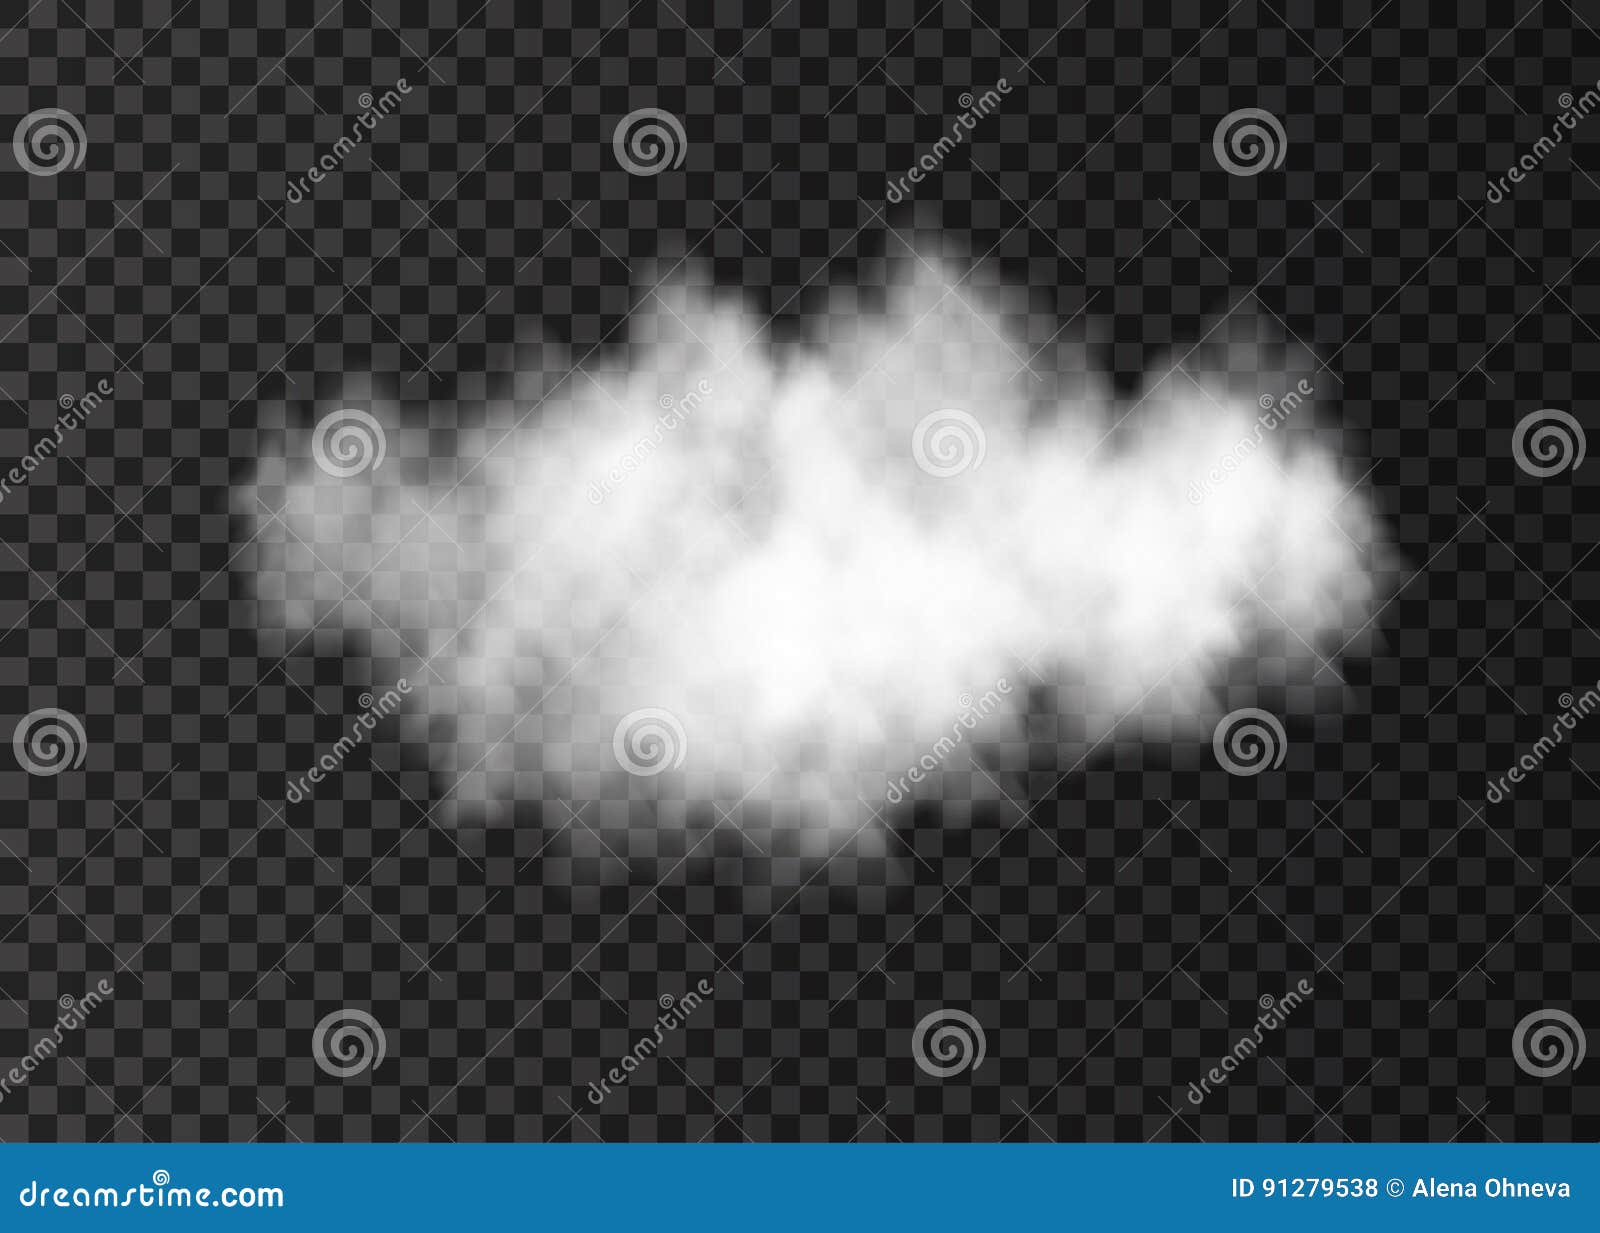 что такое облако steam фото 101